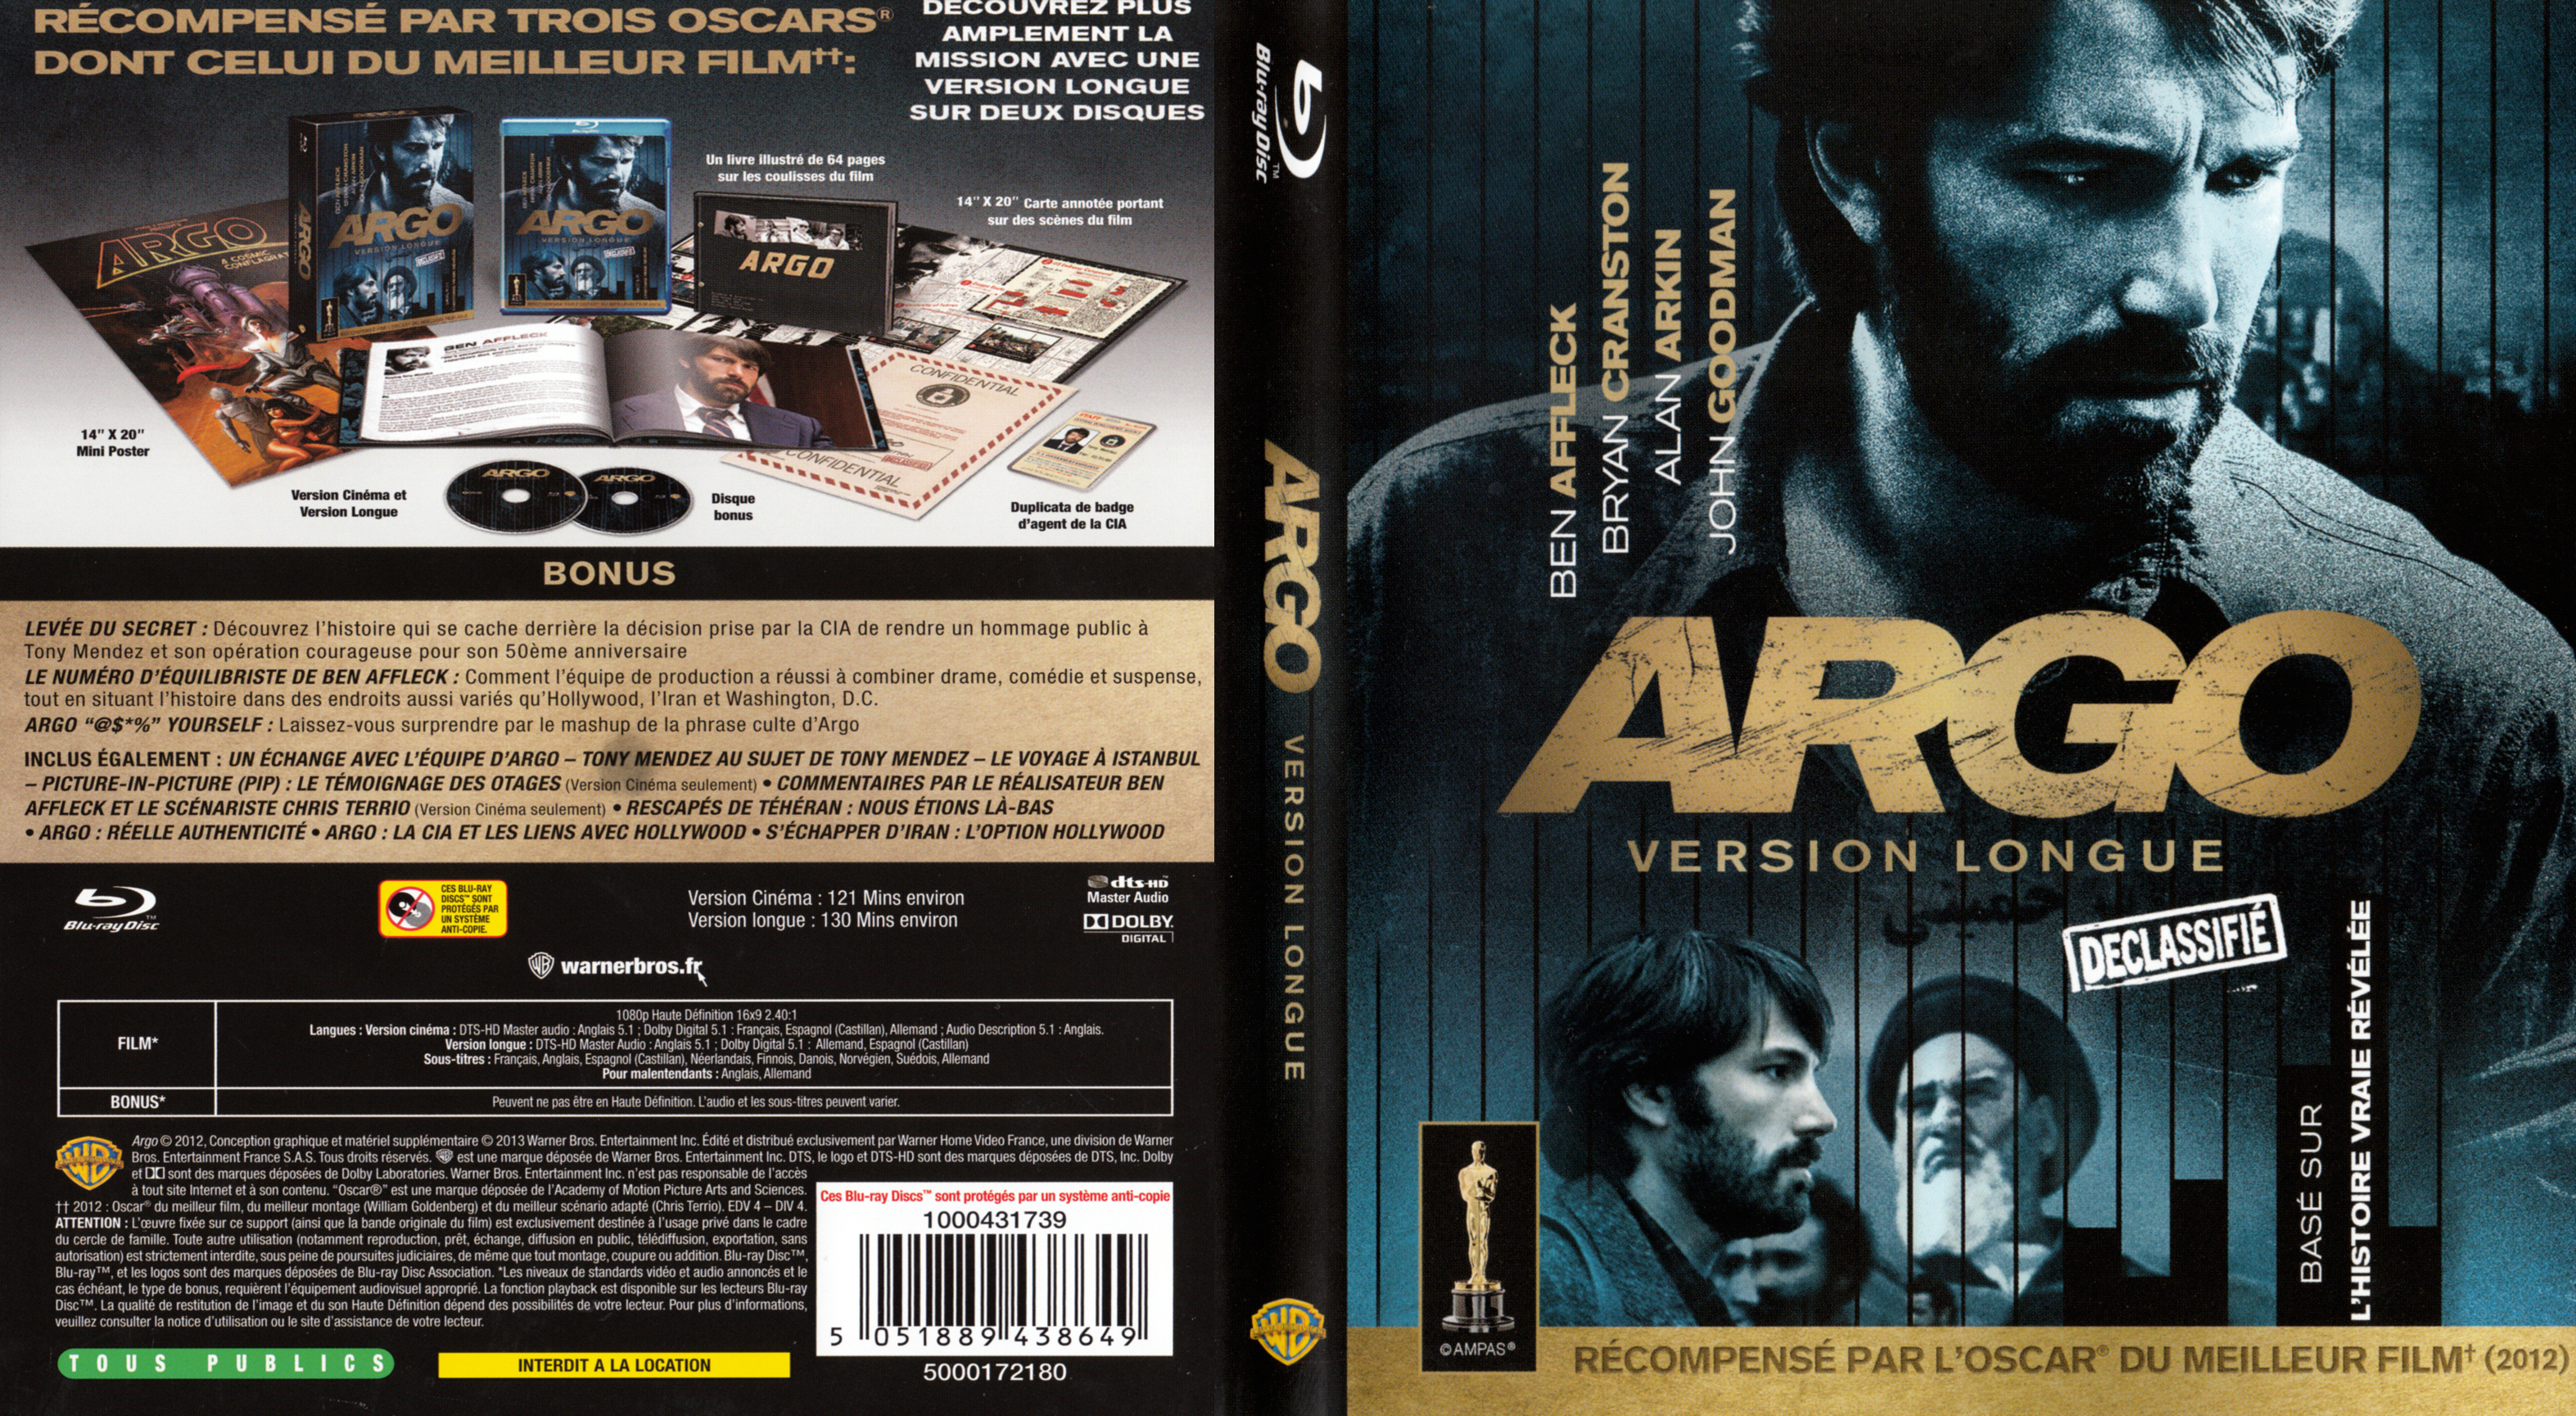 Jaquette DVD Argo (BLU-RAY) v2